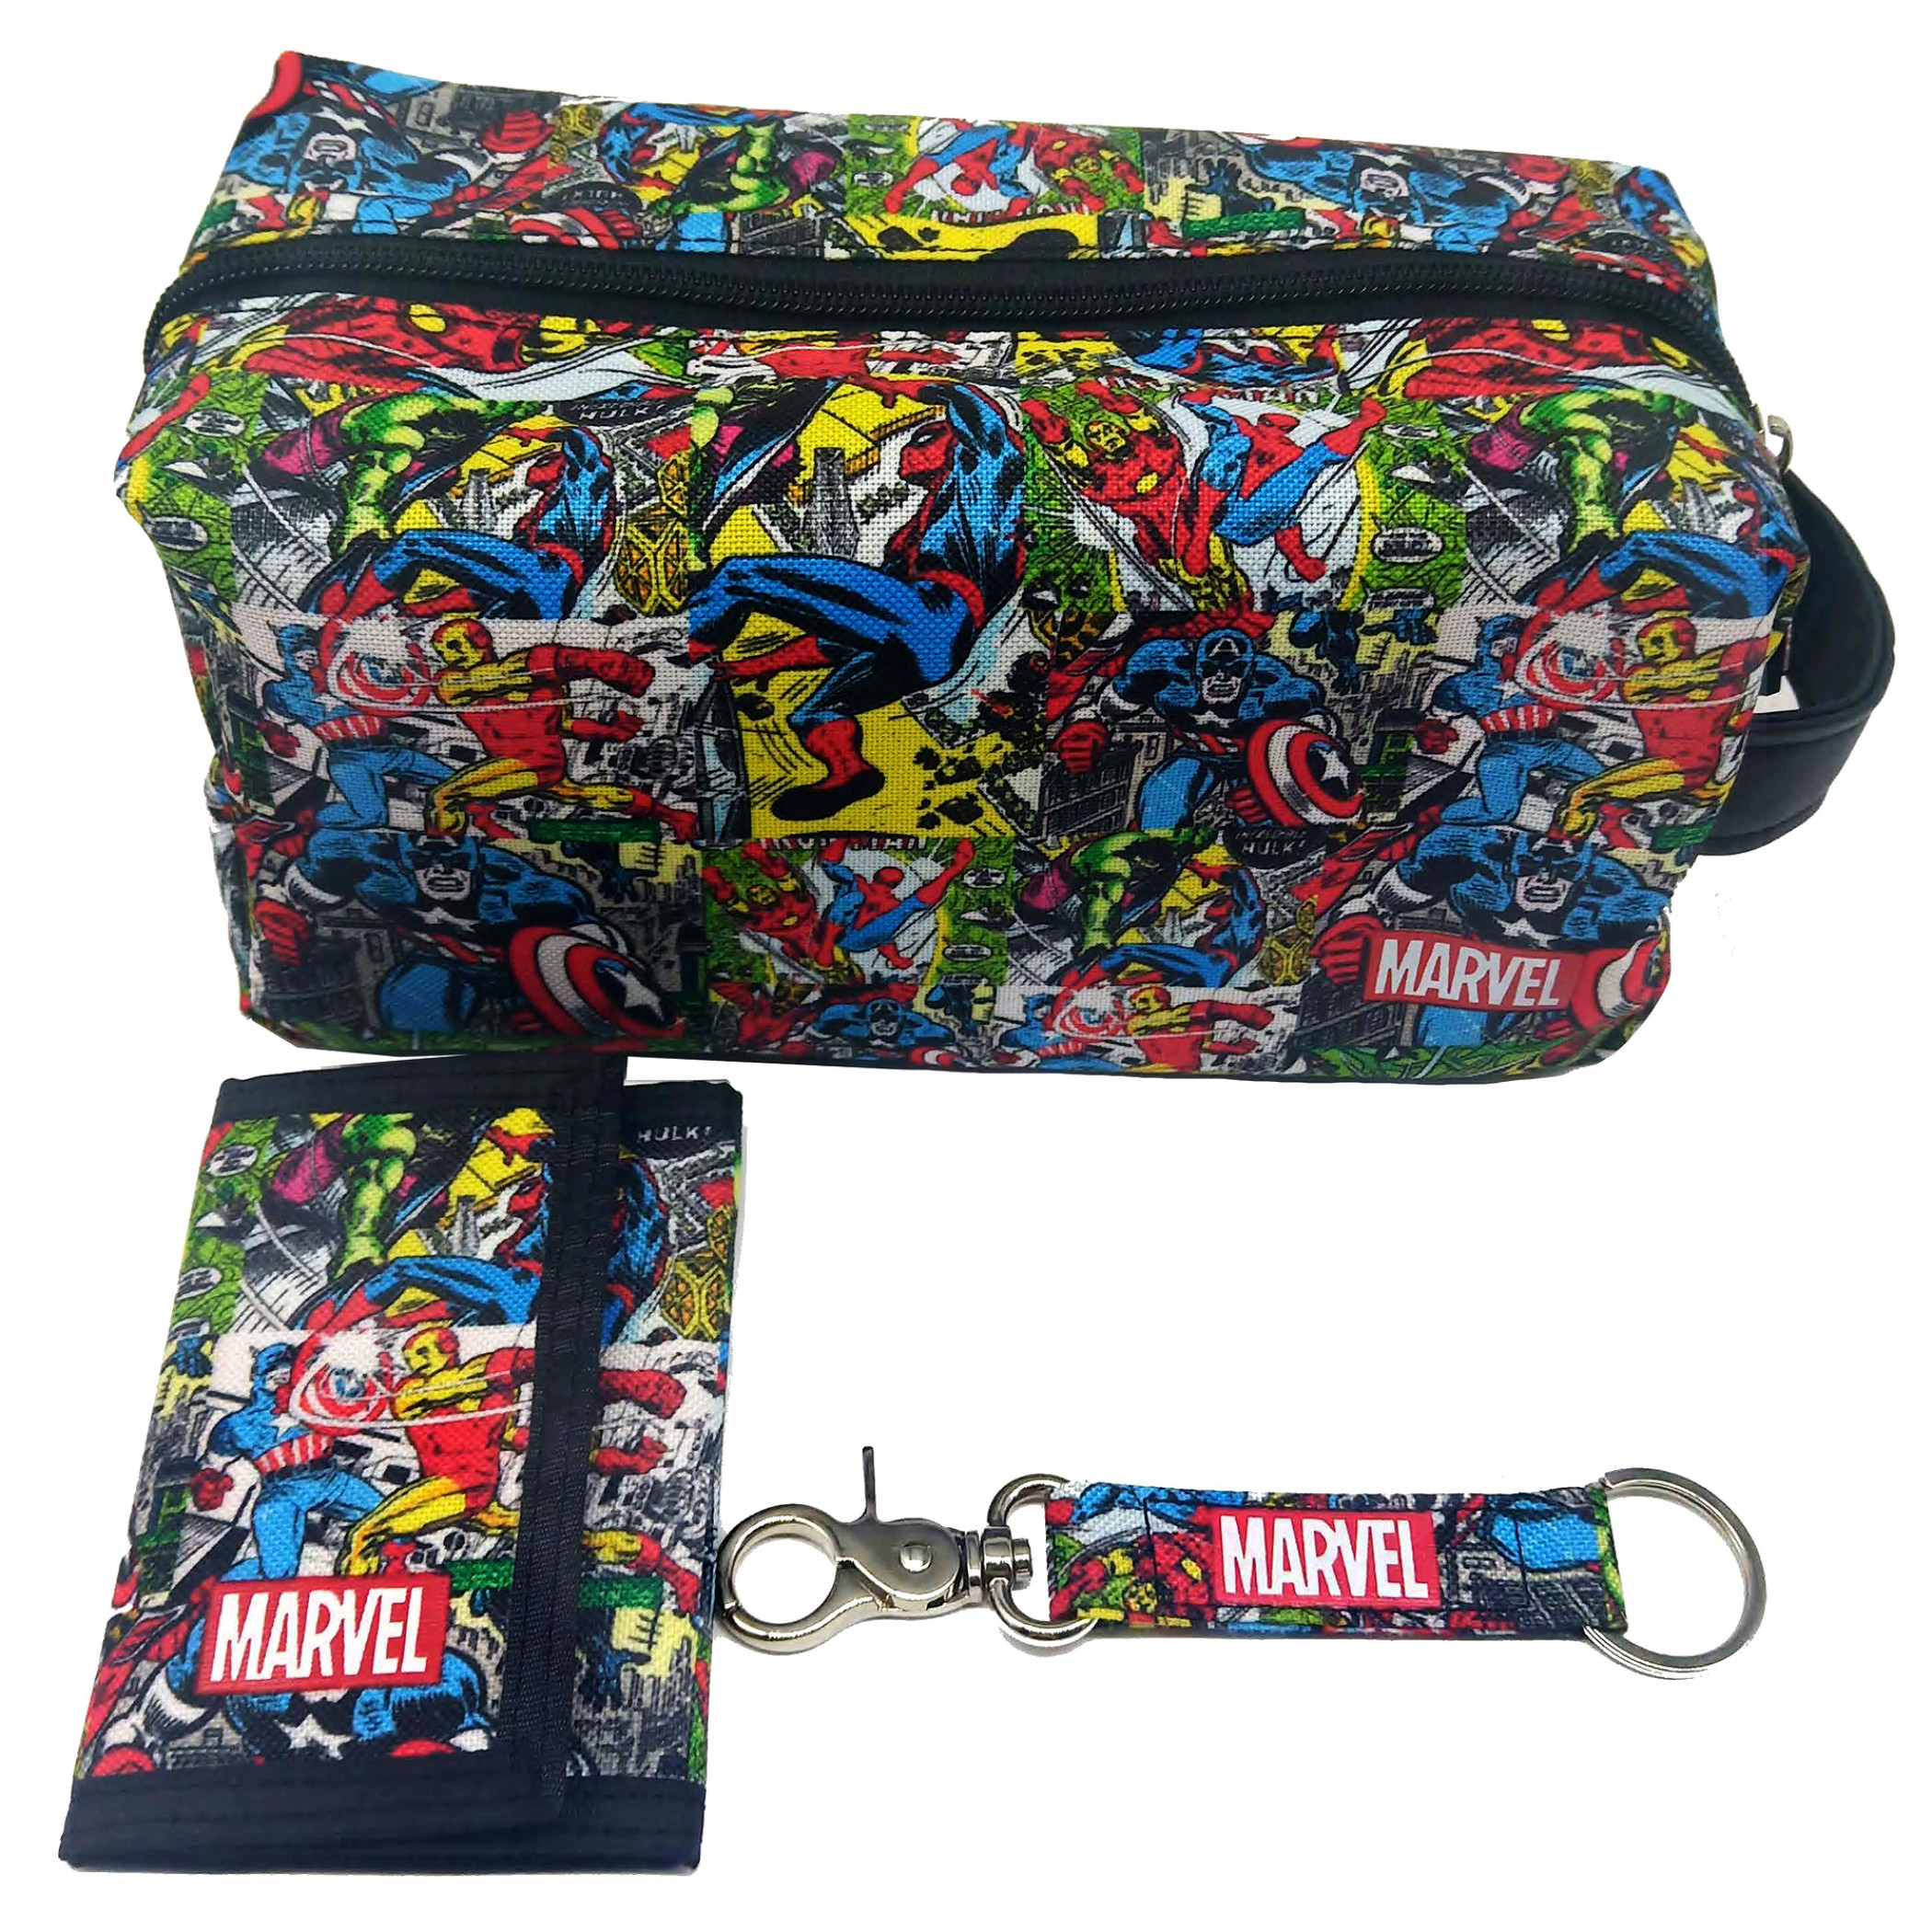 Marvel Avengers Classic Comic Art 3-Piece Grooming Bag Set